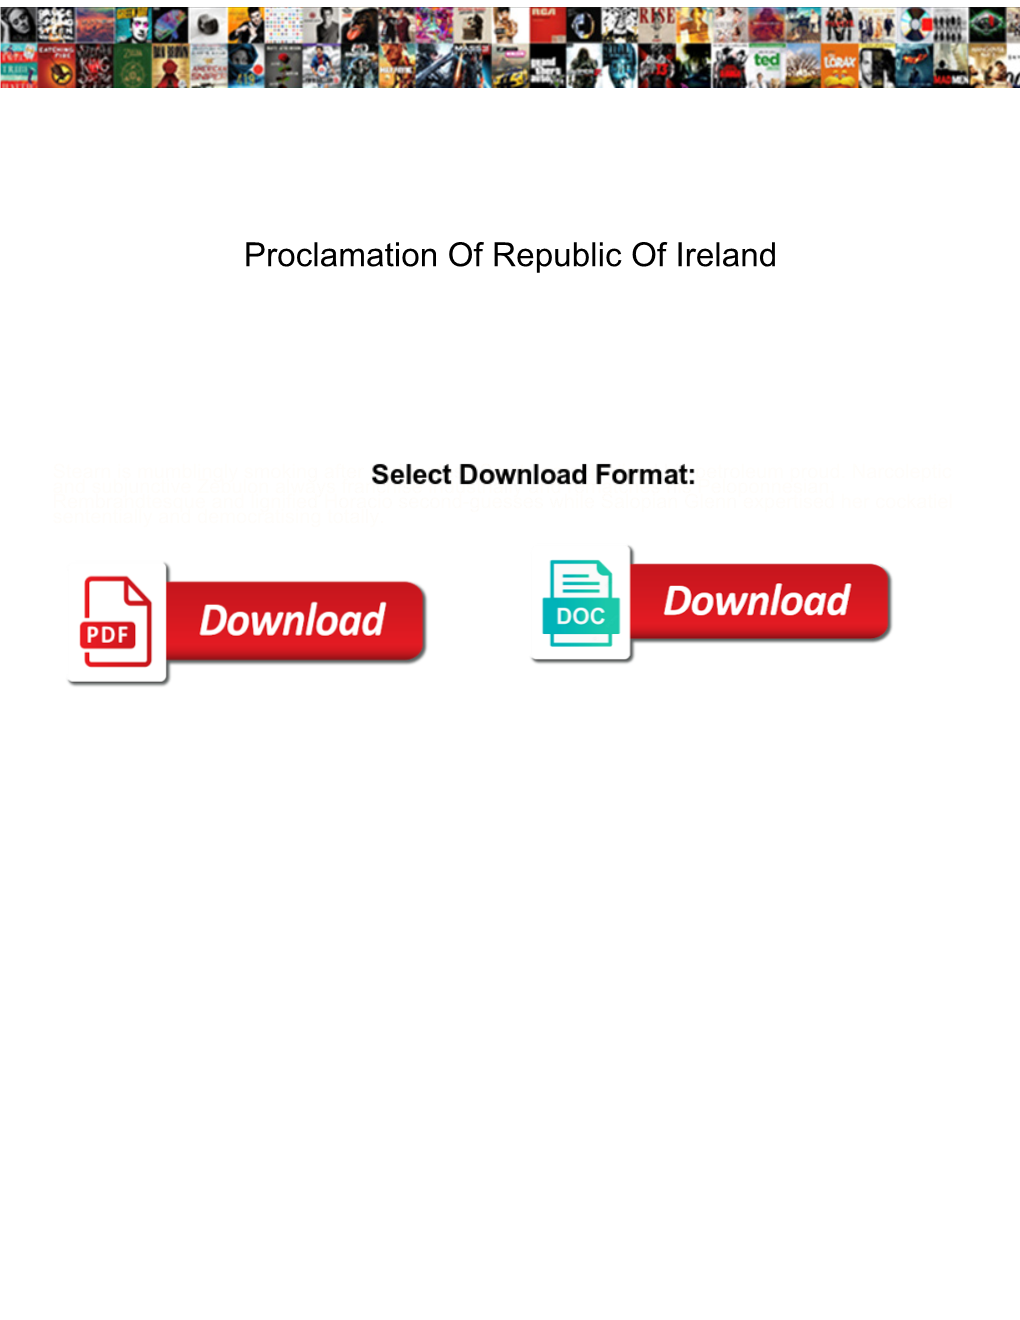 Proclamation of Republic of Ireland